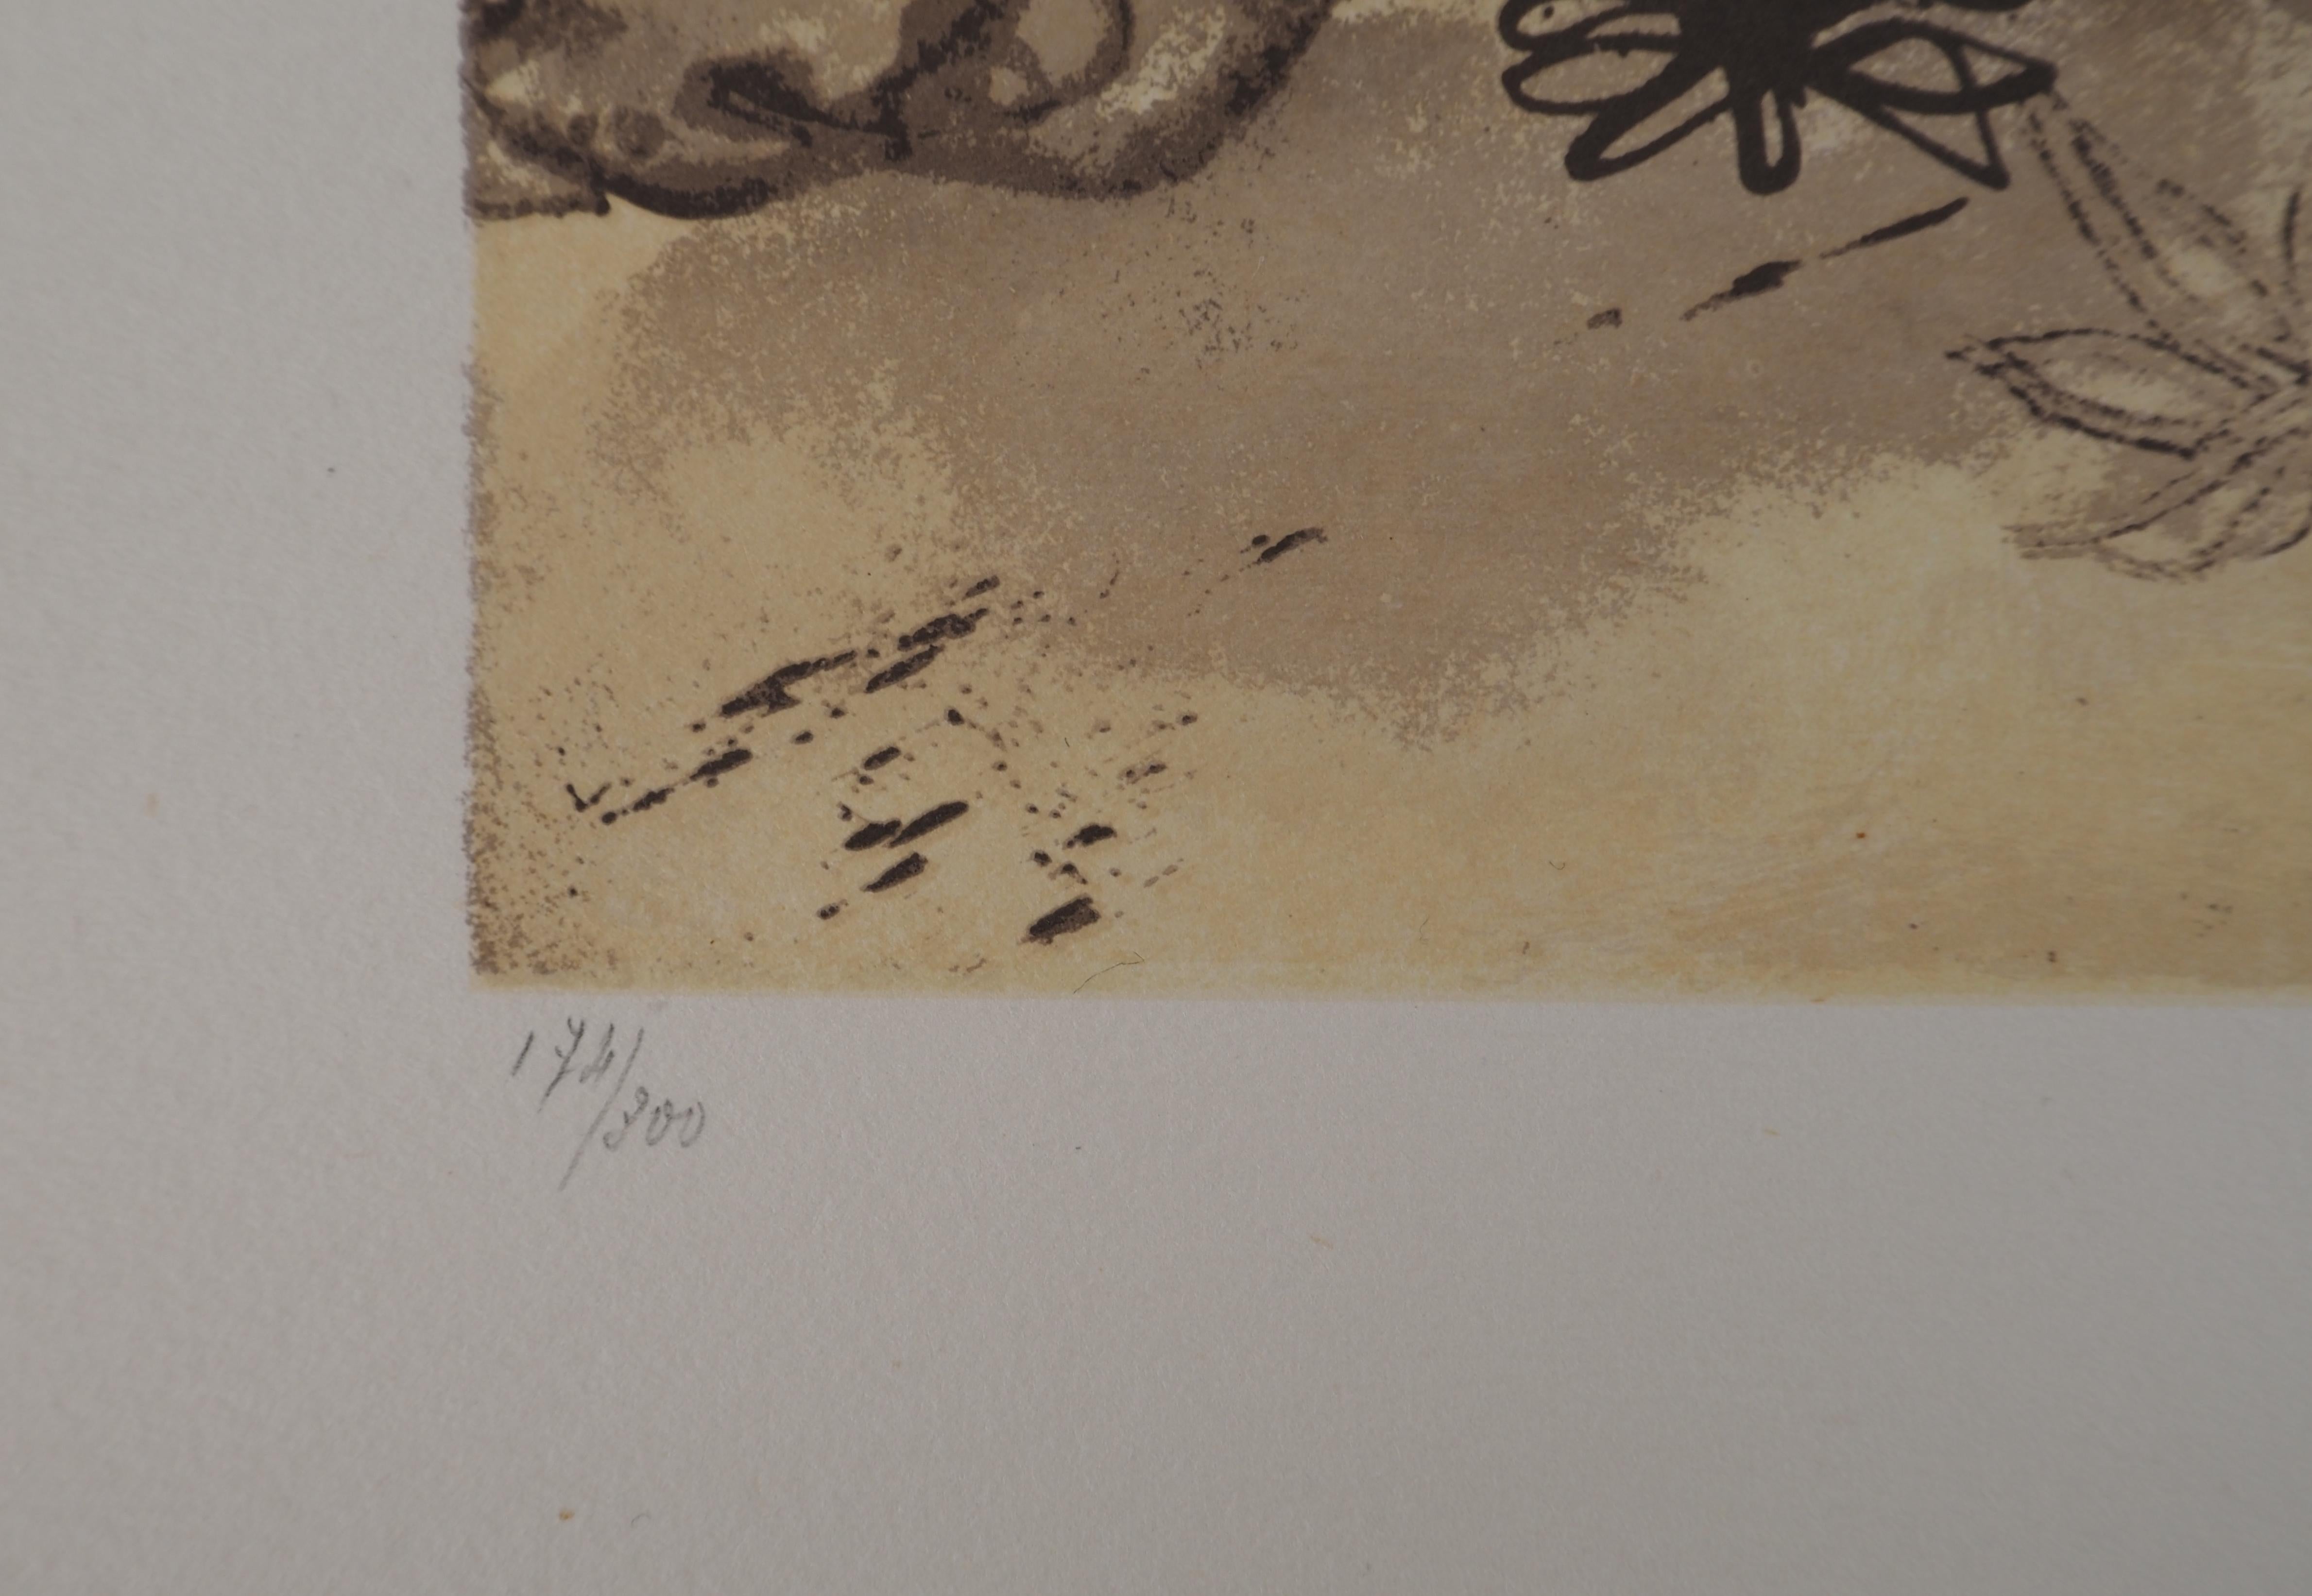 Salvador Dali (1904-1989)
Rhinoceros, Tribute to Albrecht DURER, 1971

Original lithograph
Signed in pencil
Numbered / 300
On Guarro vellum 76 x 56.5 cm (c. 30 x 22 in)

REFERENCE : Catalog raisonné de l'œuvre graphique Sala Gaspar, Barcelone 1970,